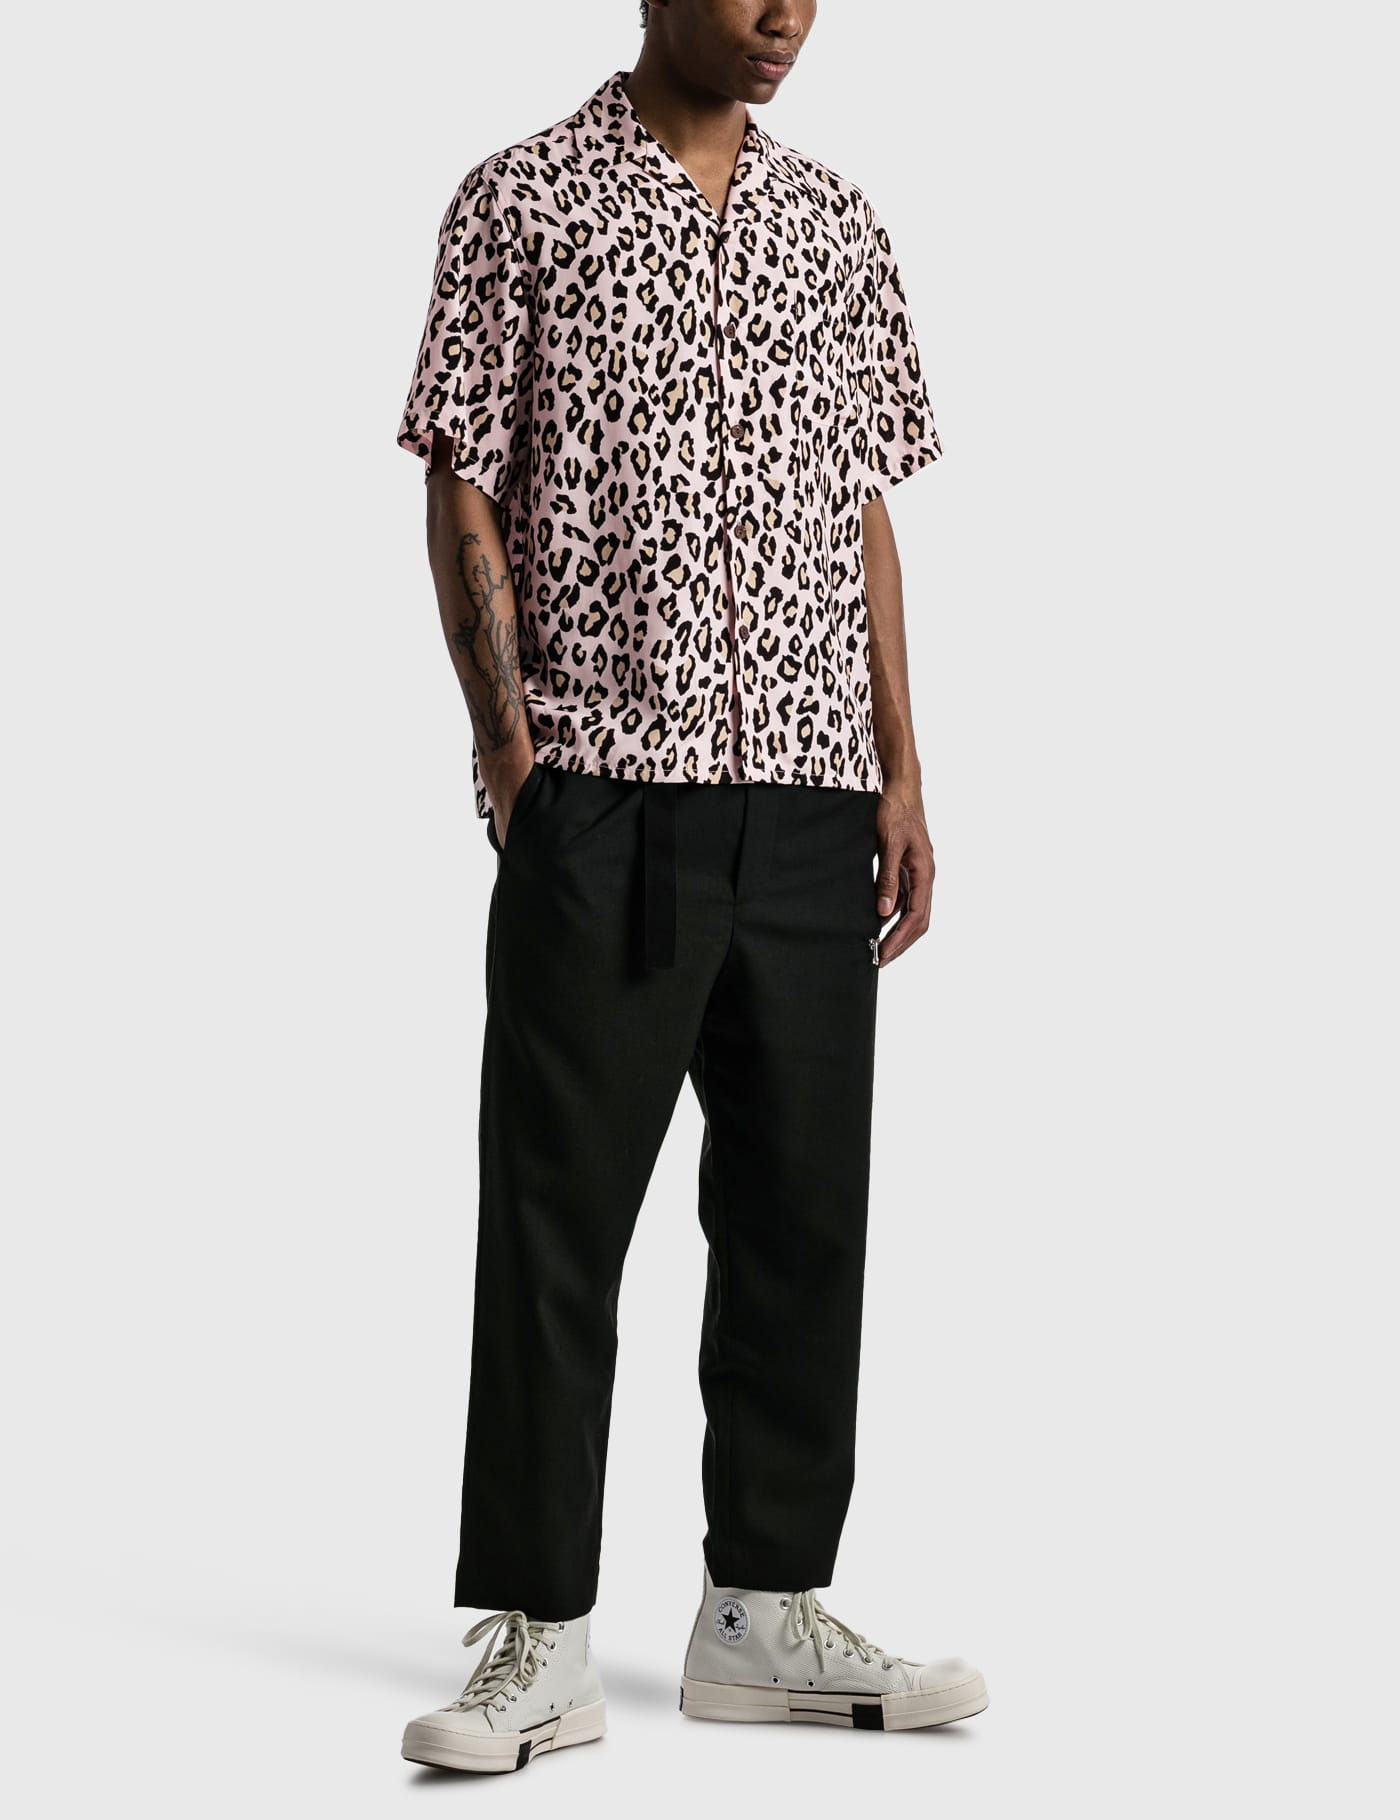 Wacko Maria - Leopard Open Collar Shirt | HBX - Globally Curated